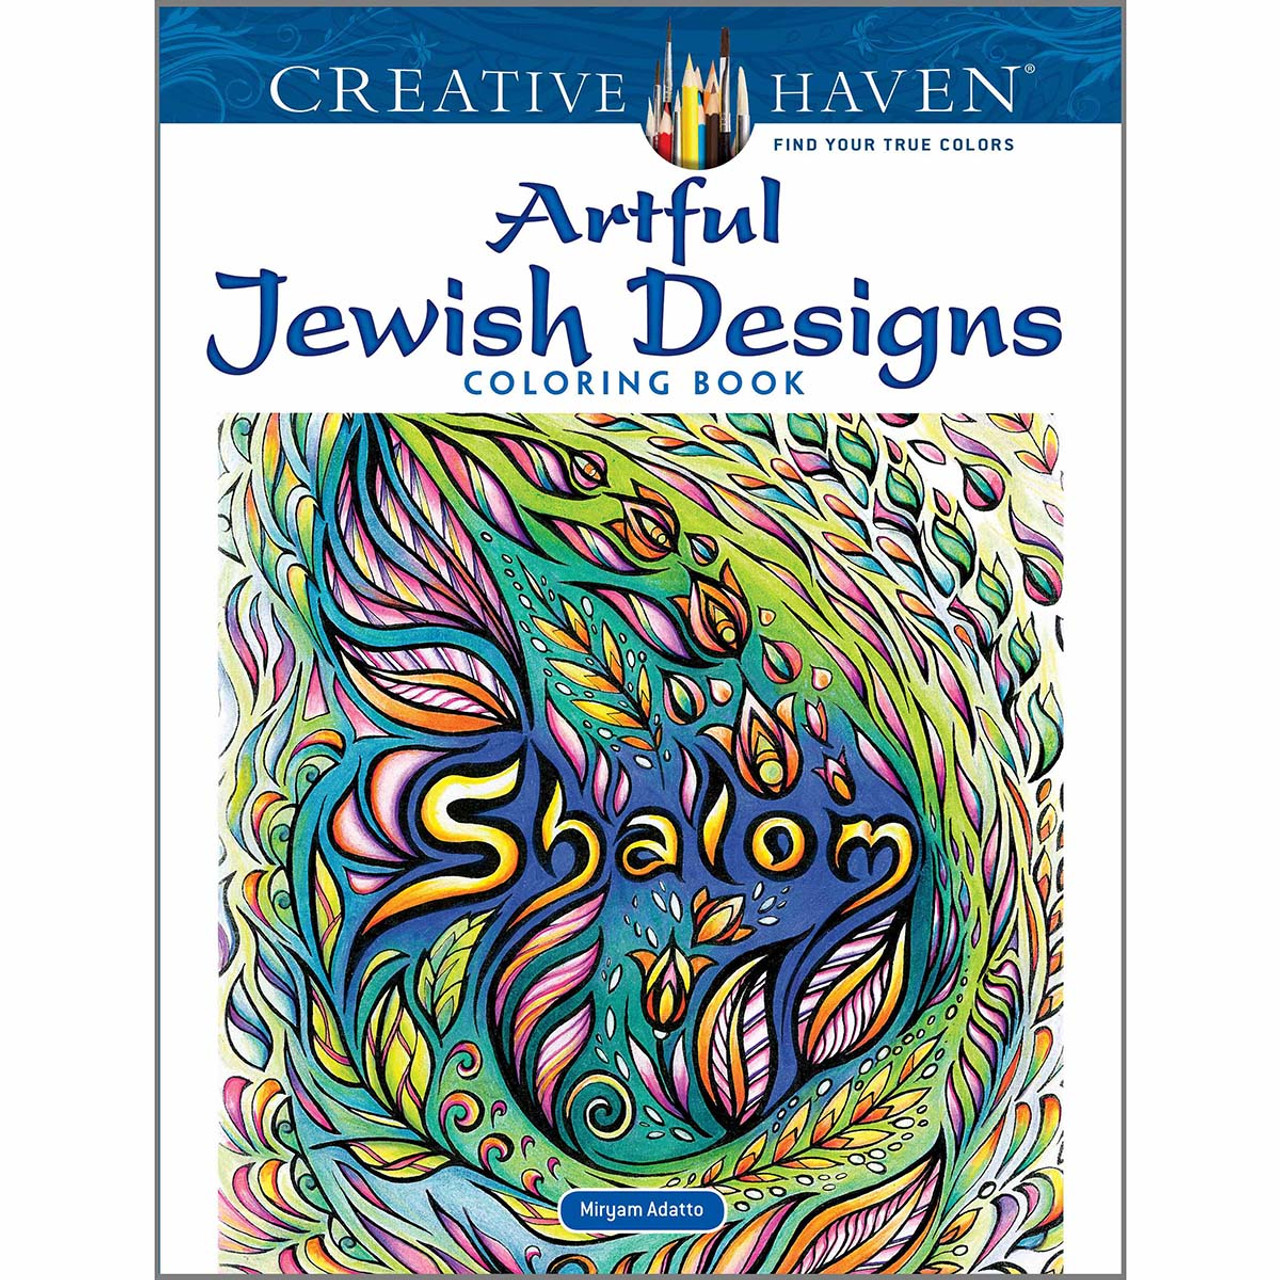 Creative Haven Celtic Nature Designs Coloring Book [Book]